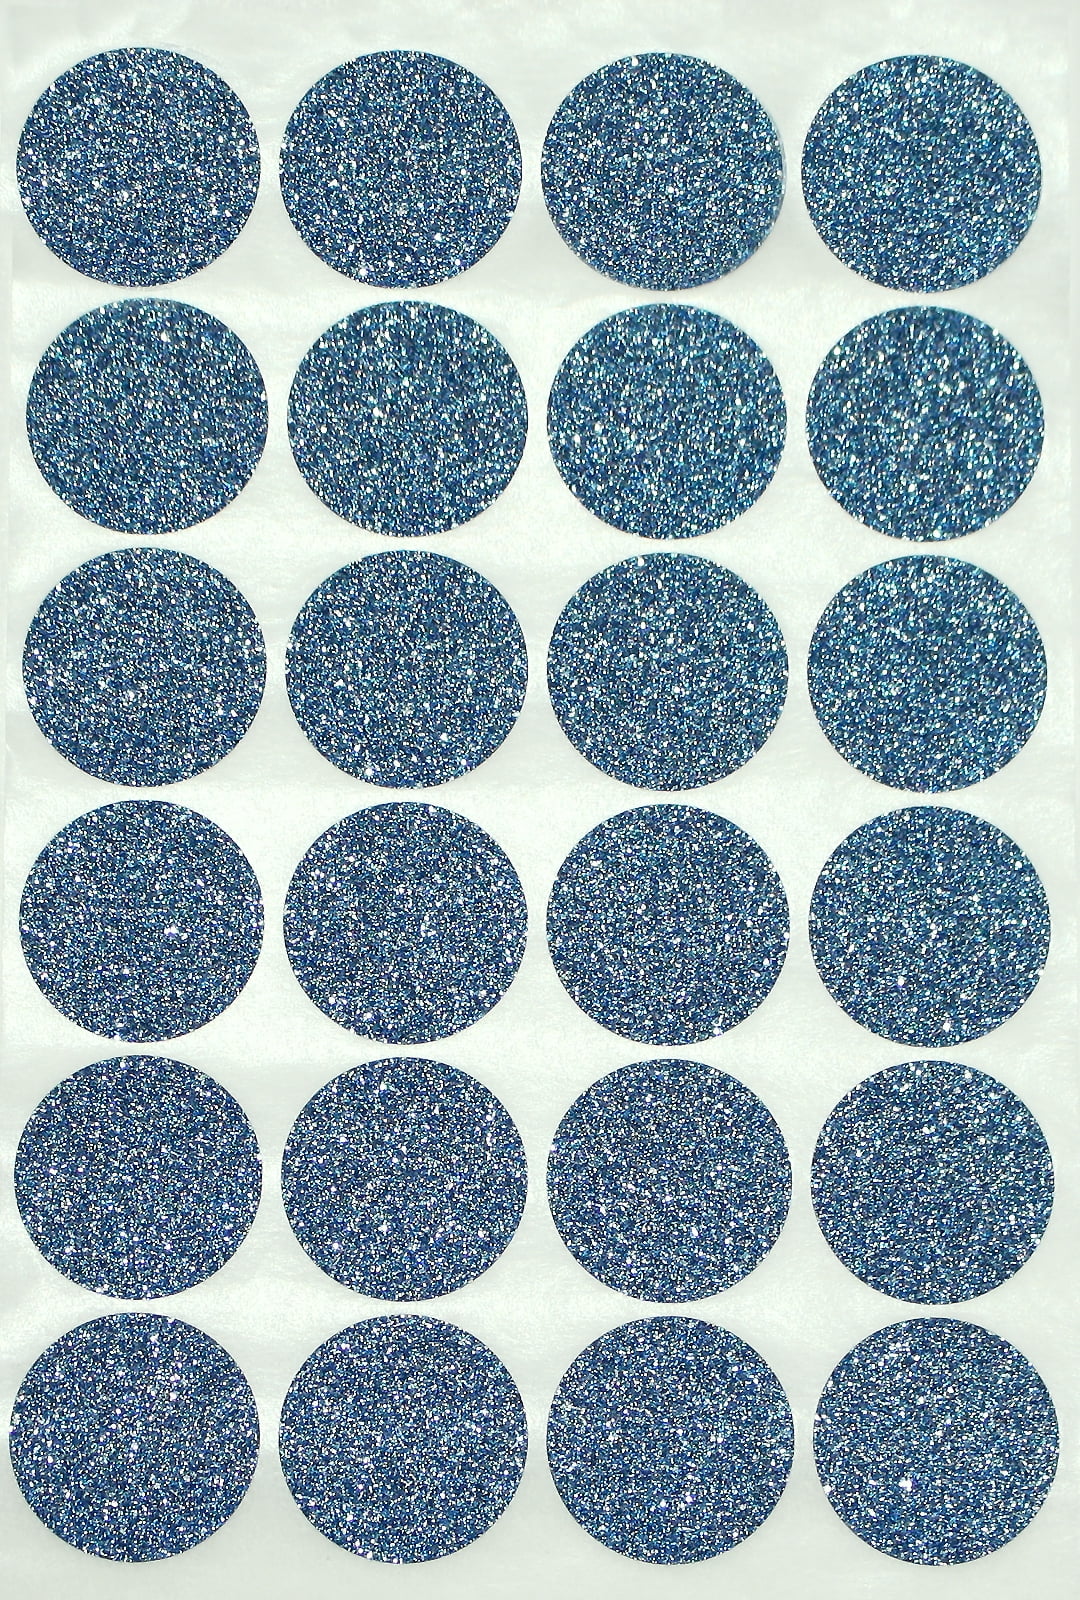 1400 Pcs Colored Sticker Dots Envelopes Sealing Labels Stickers